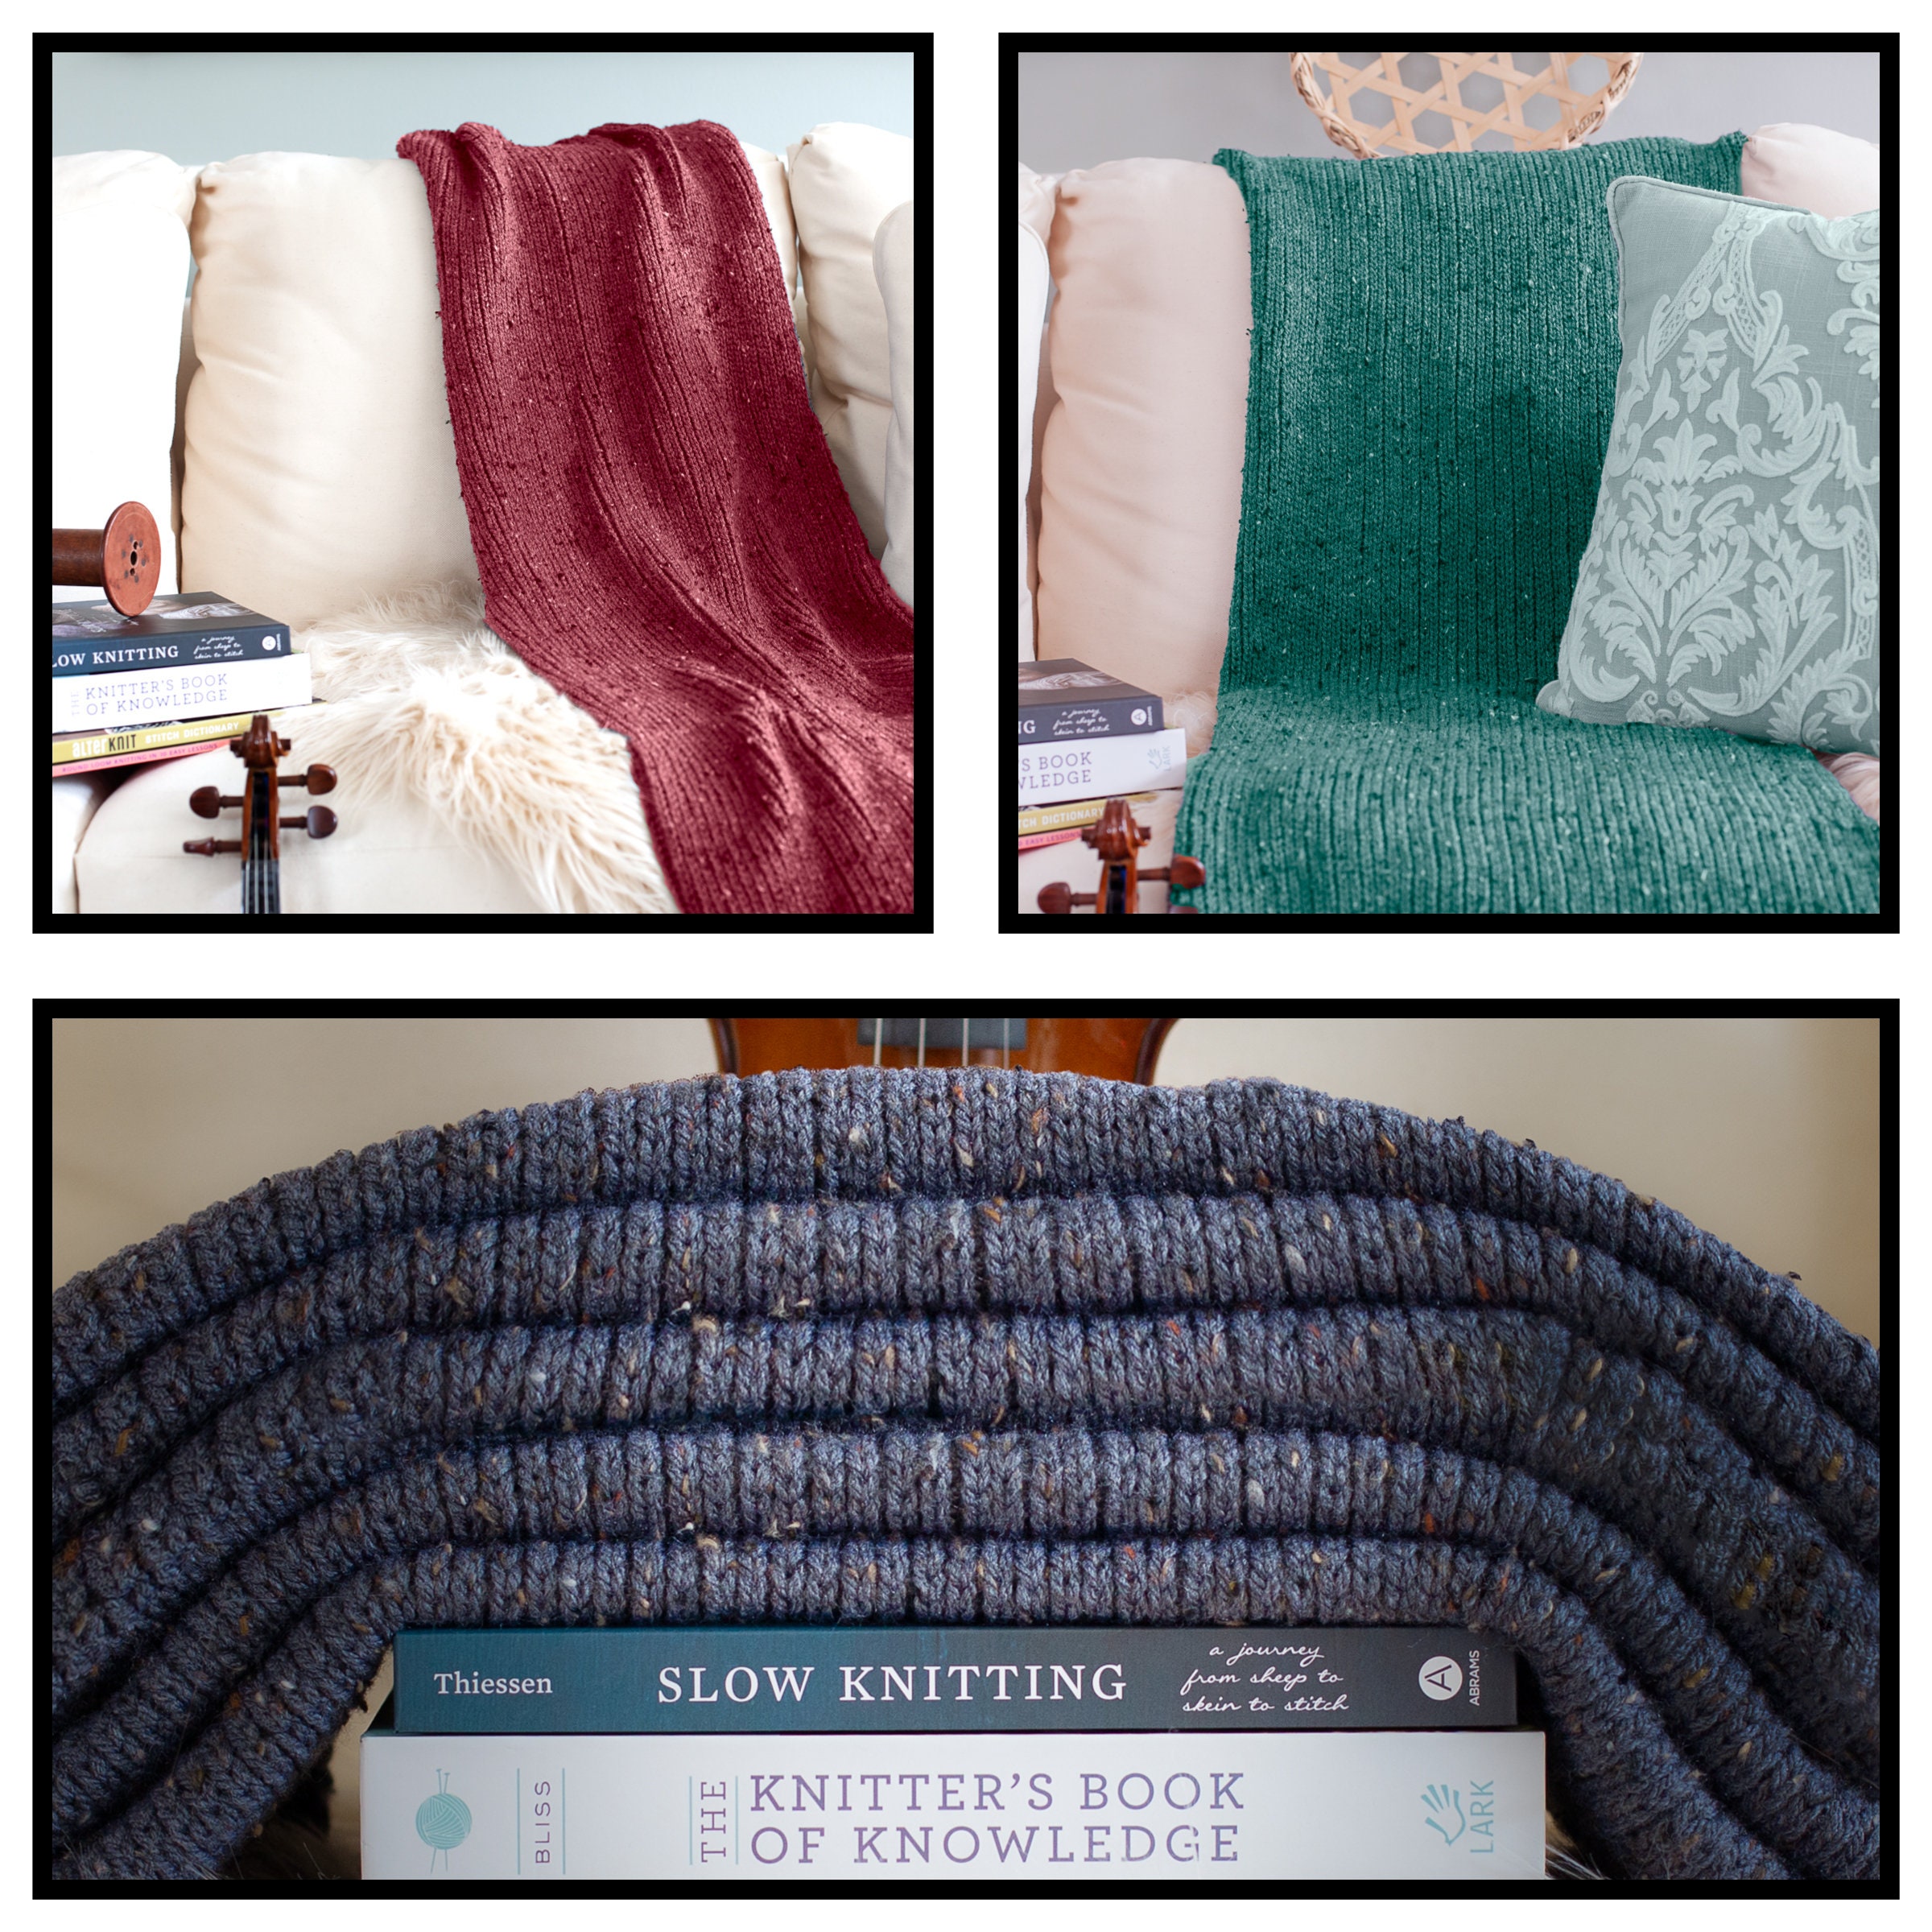 Blanket sizes and suggested yardage – LOOM KNIT